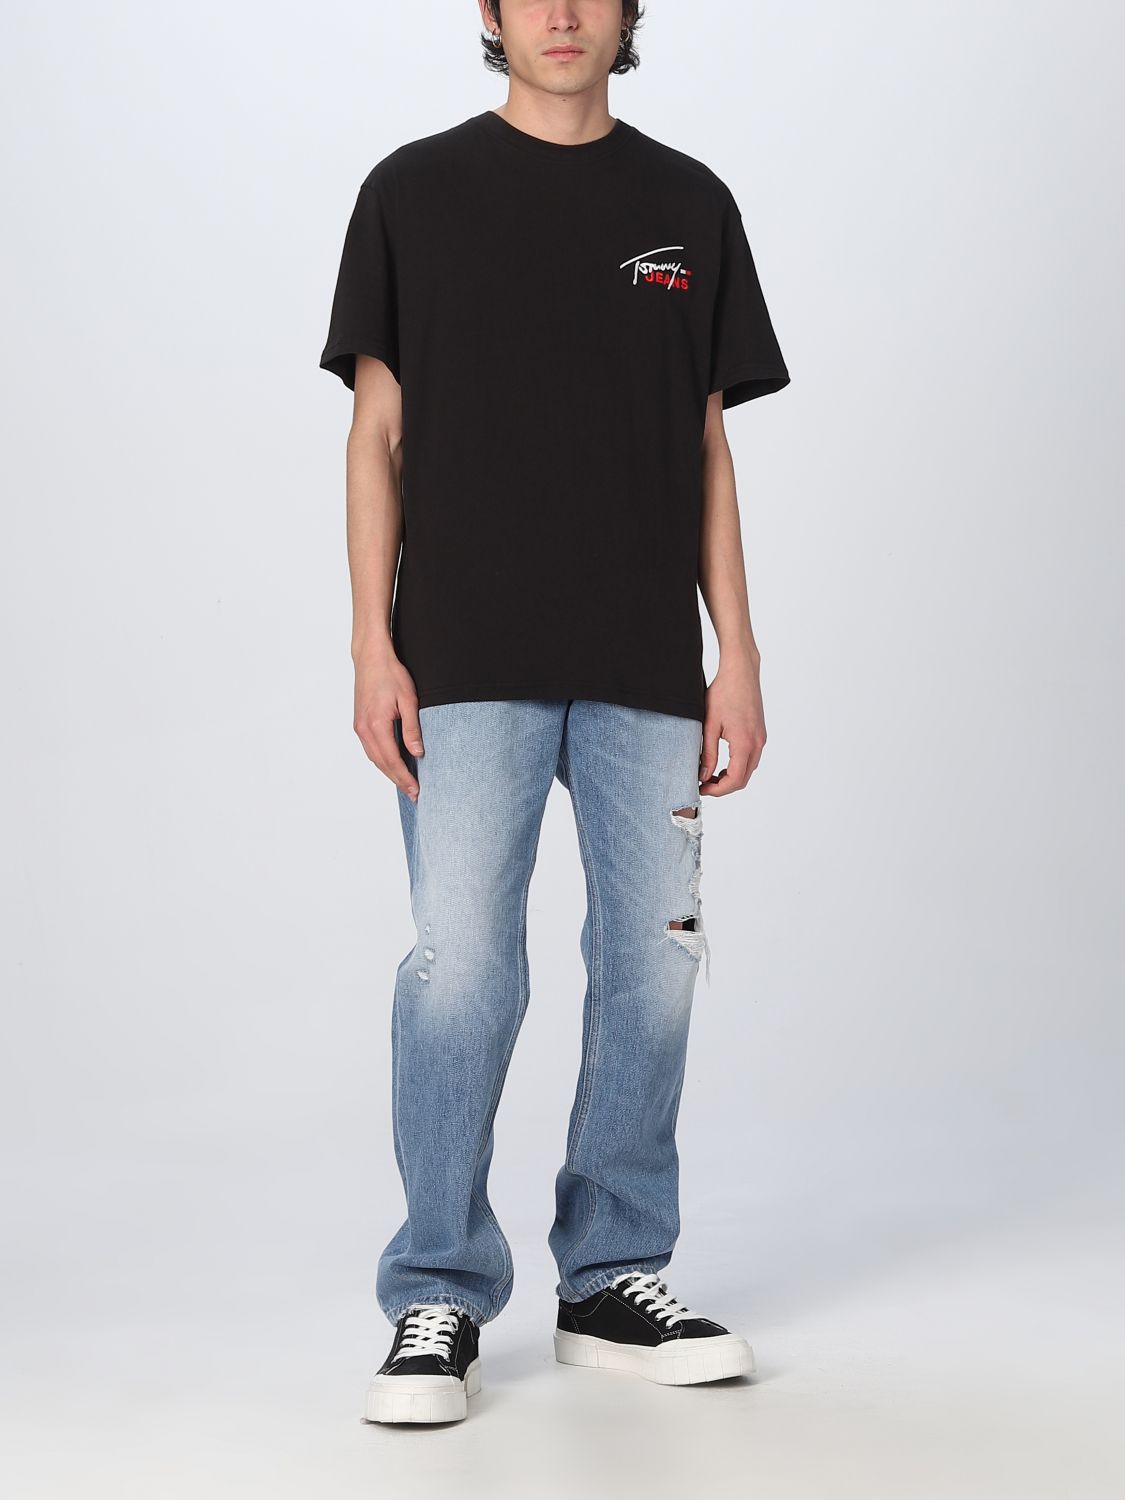 beheerder Bovenstaande typist TOMMY JEANS: t-shirt for man - Black | Tommy Jeans t-shirt DM0DM16236  online on GIGLIO.COM